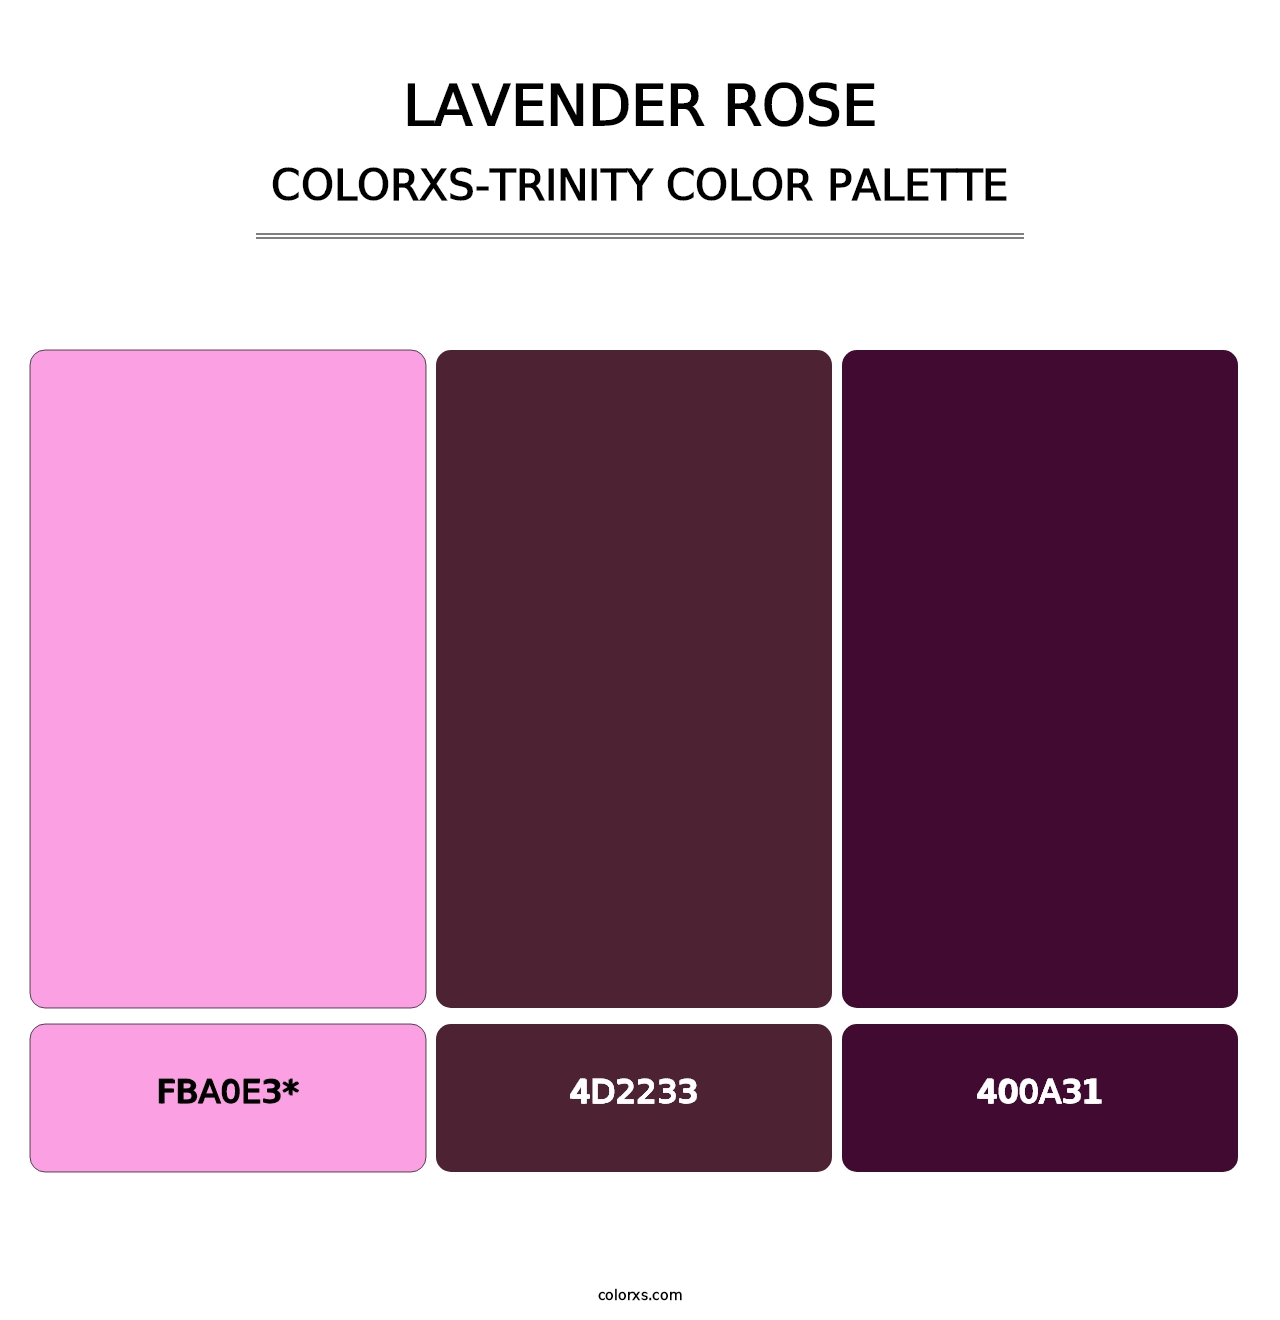 Lavender Rose - Colorxs Trinity Palette